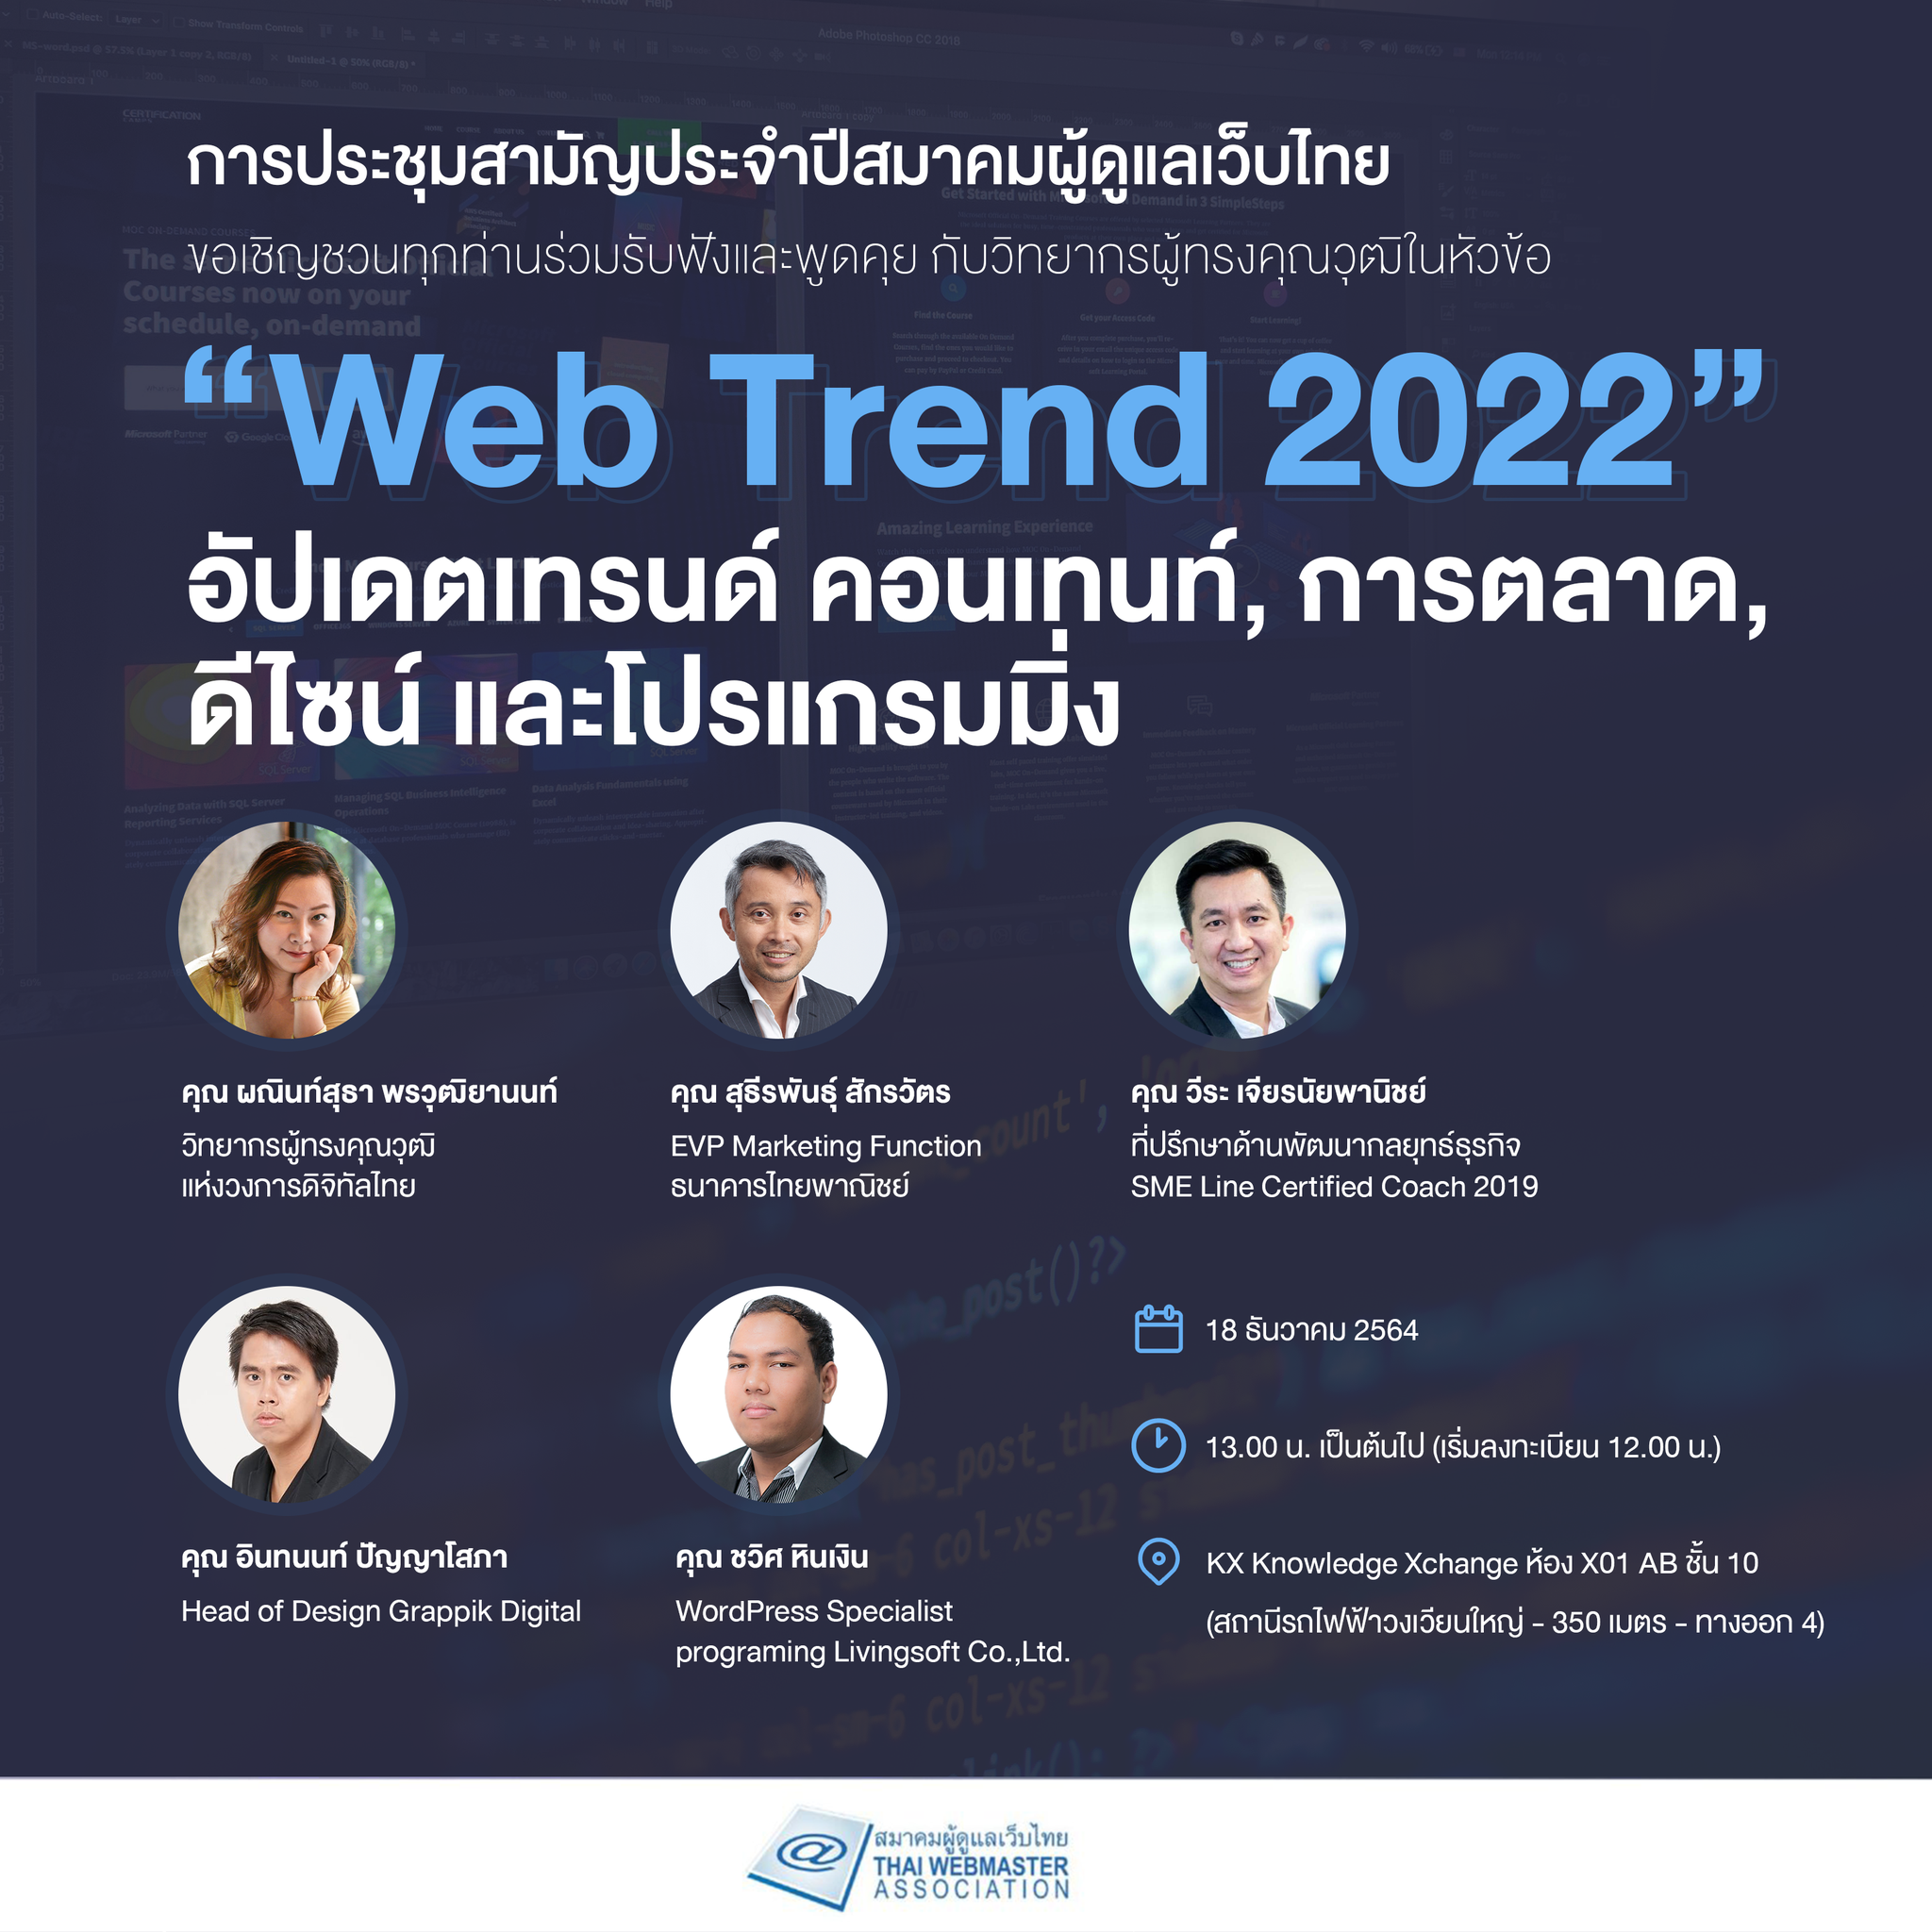 Cover Image for การประชุมใหญ่สามัญประจำปี 64 และงานจิบกาแฟคนทำเว็บ หัวข้อ “Web Trend 2022” 